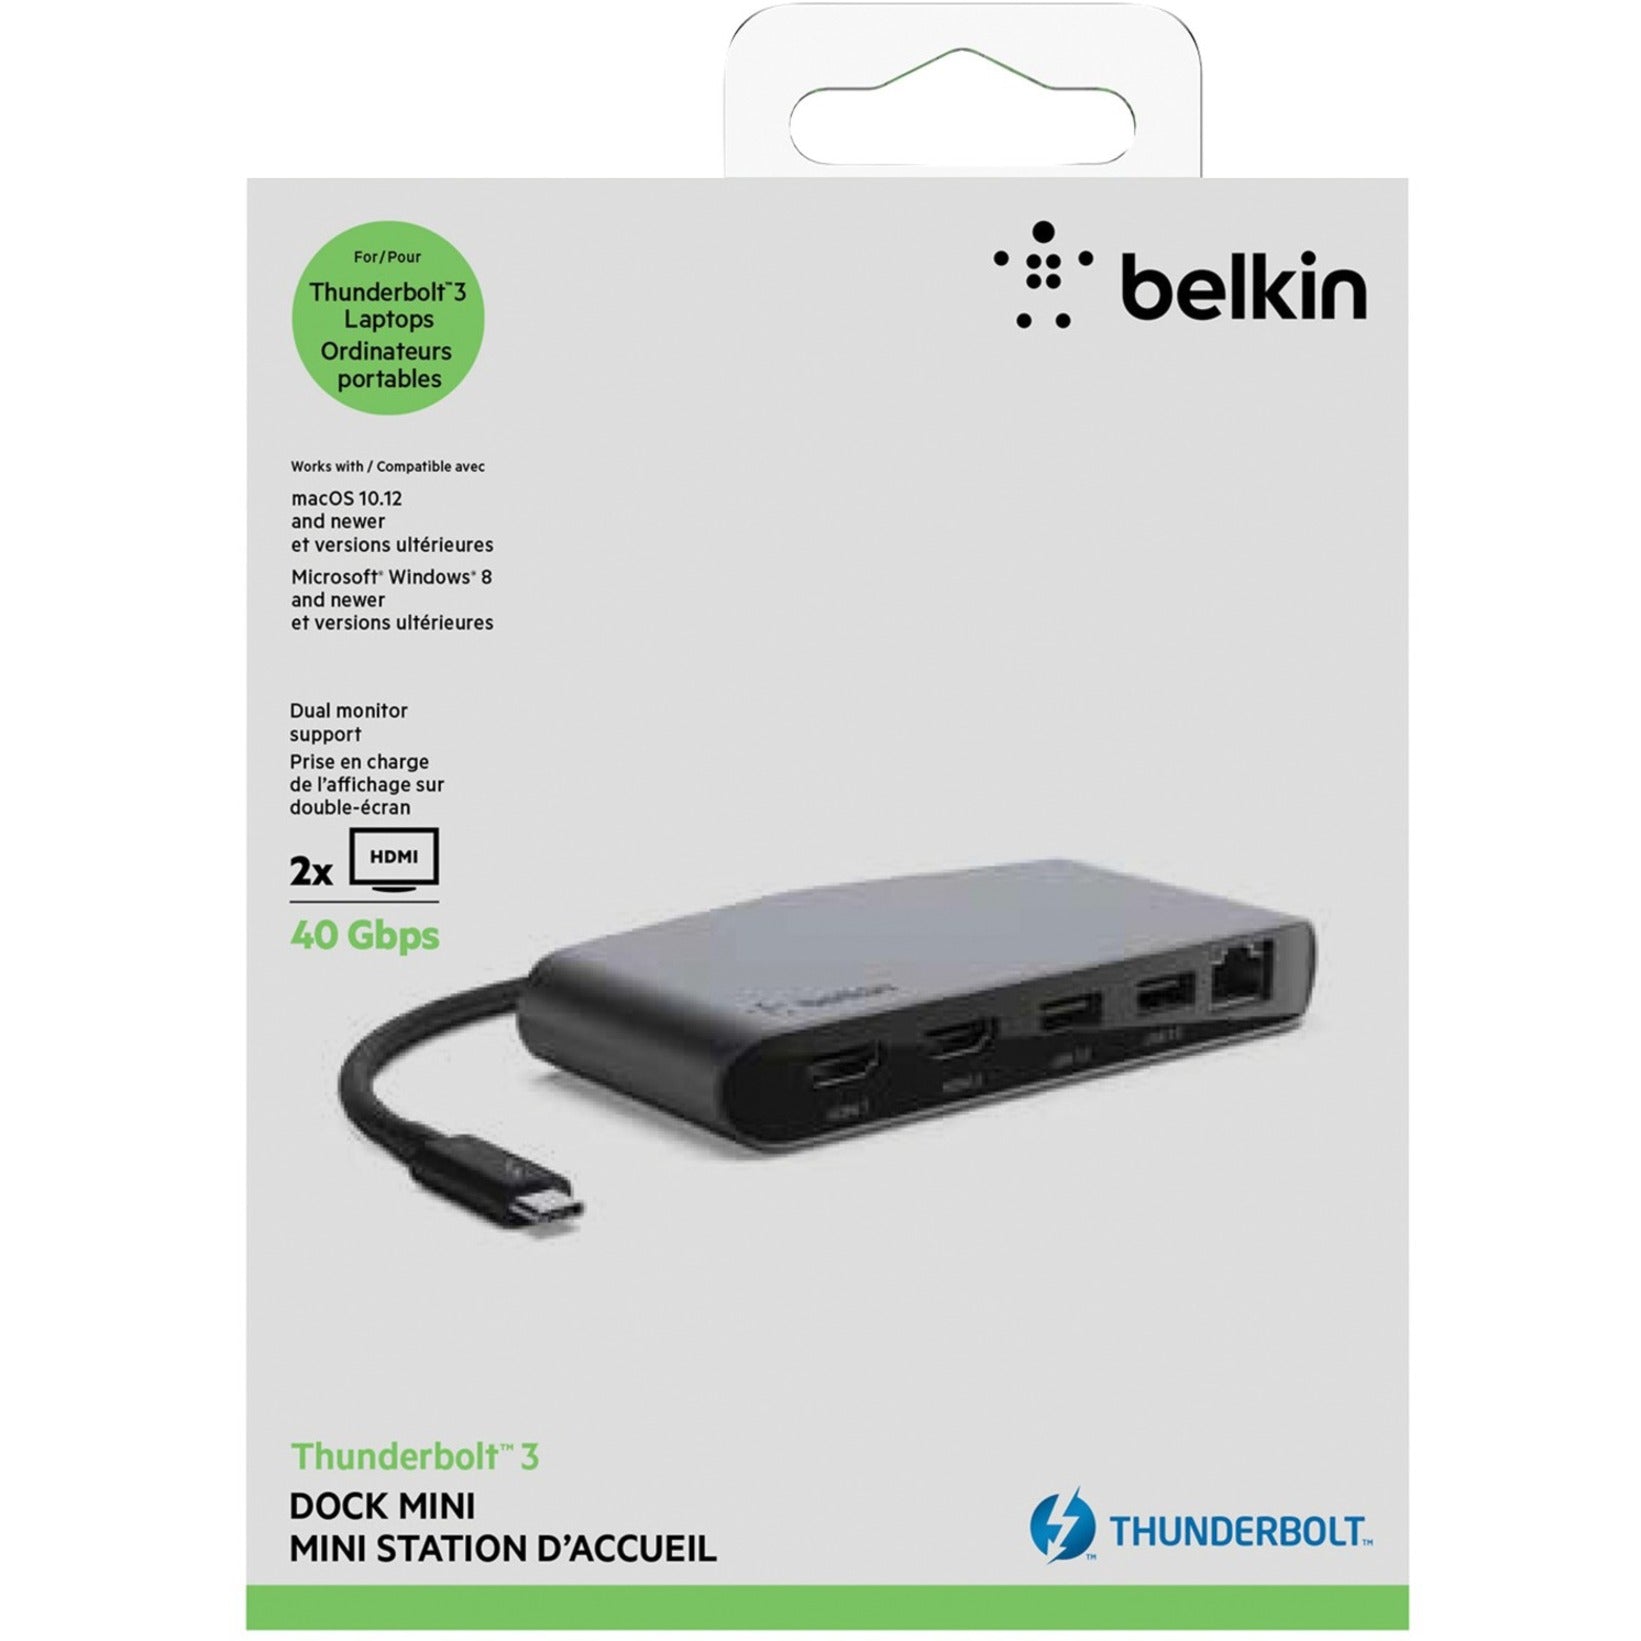 Belkin F4U098BT Thunderbolt 3 Dock Mini HD, Dual 4k Display @60Hz, MacOS and Windows Compatible